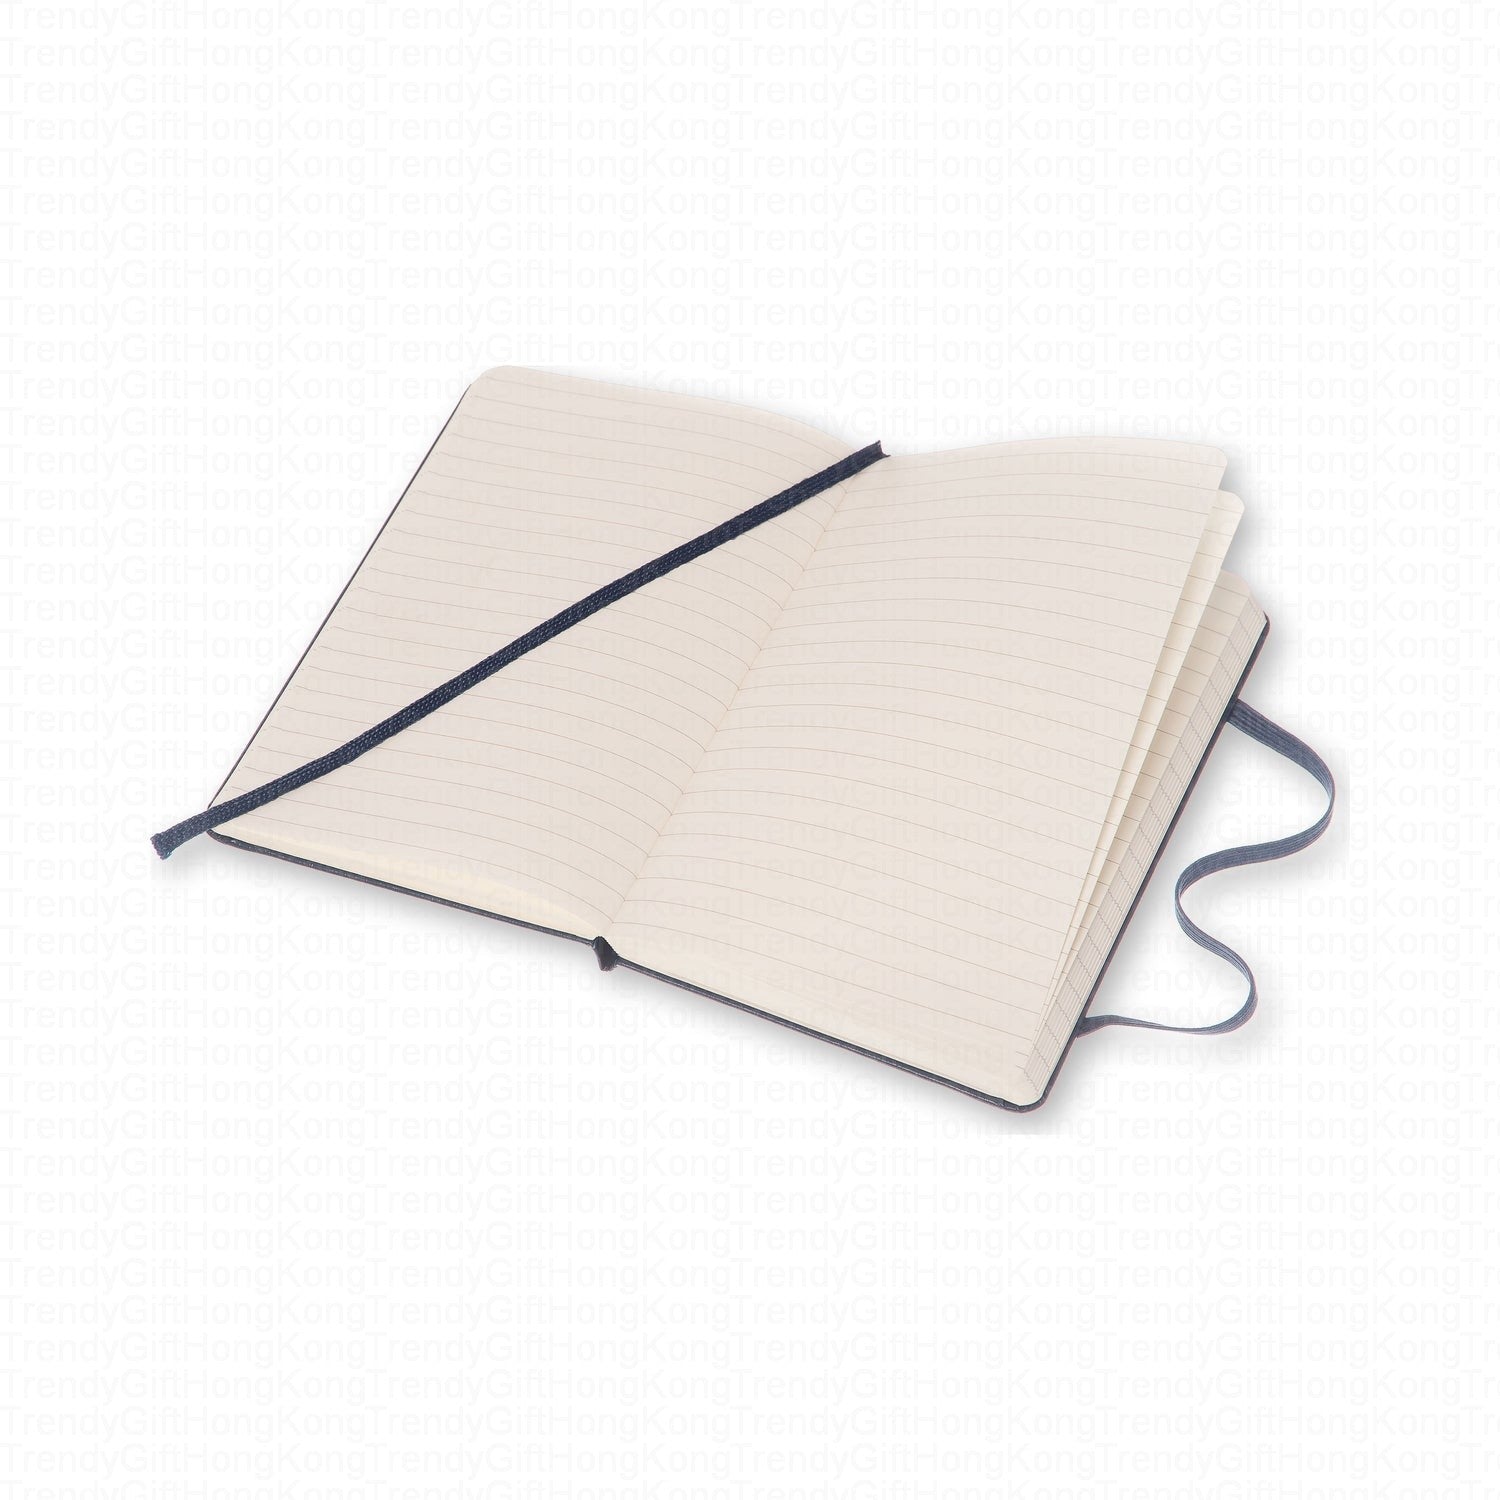 Moleskine Classic Pocket Notebook - Hard Cover 9 x 14 CM trendygifthk